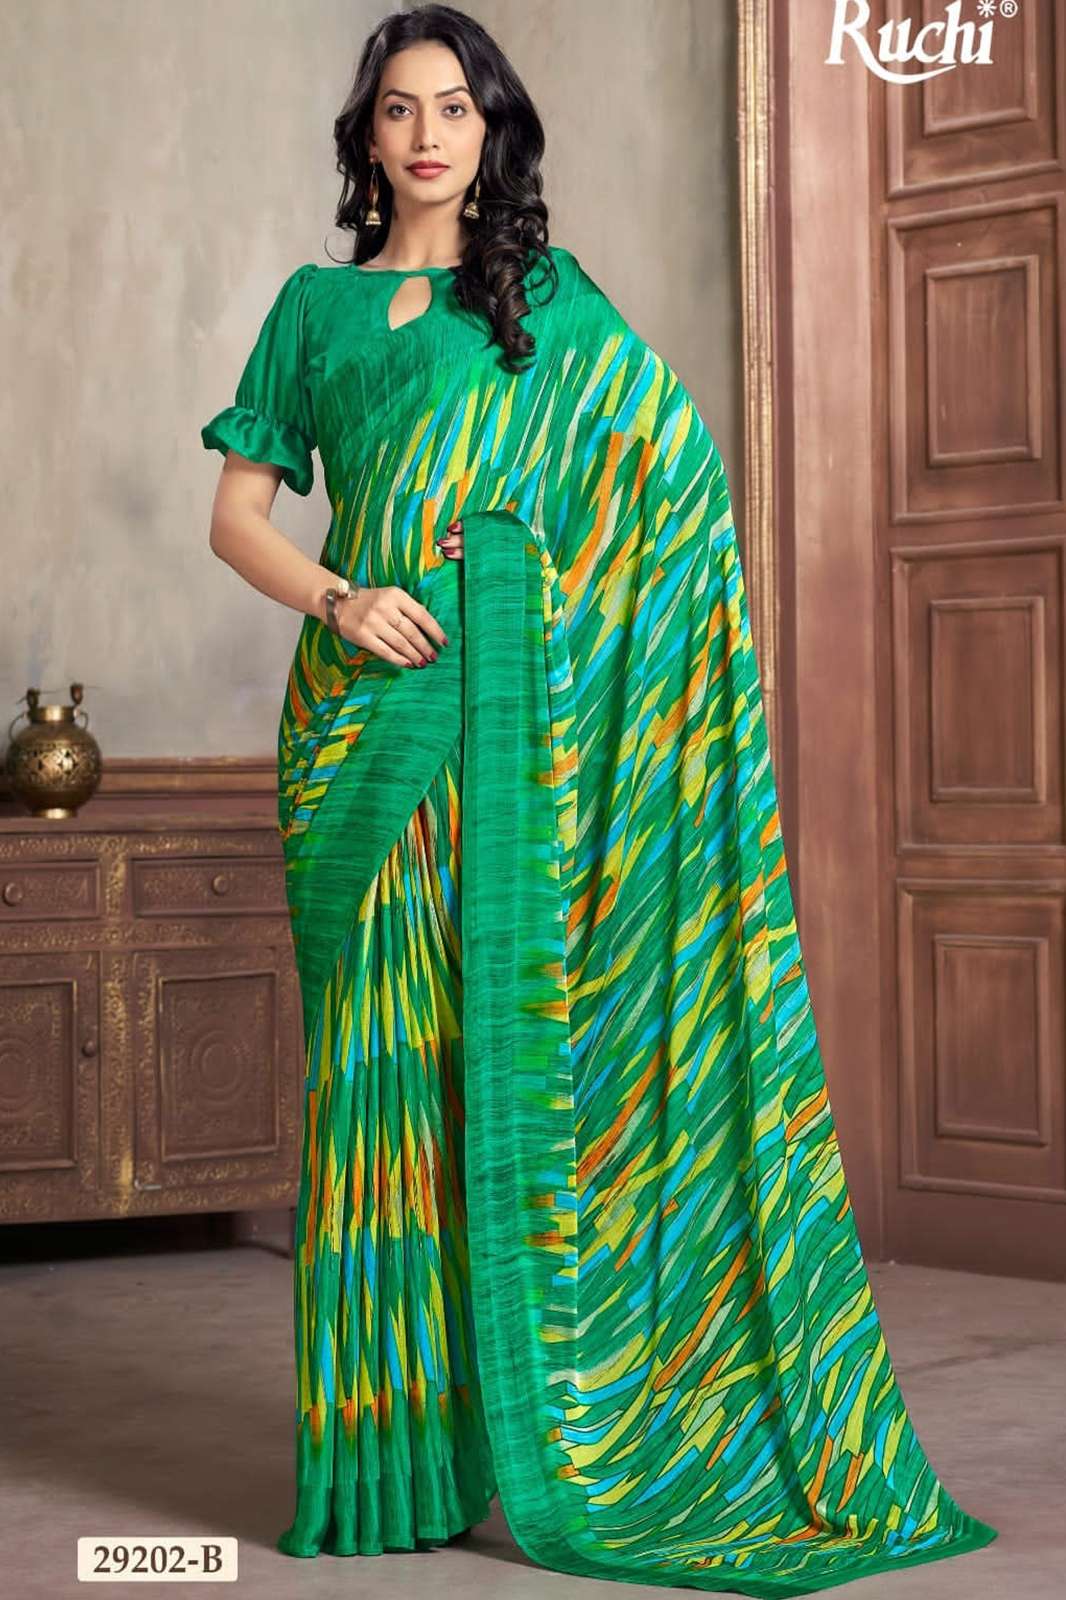 RUCHI CHERRY VOL-40  Chiffon Saree with Satin weaved border with beautiful print in multicolors  saree  